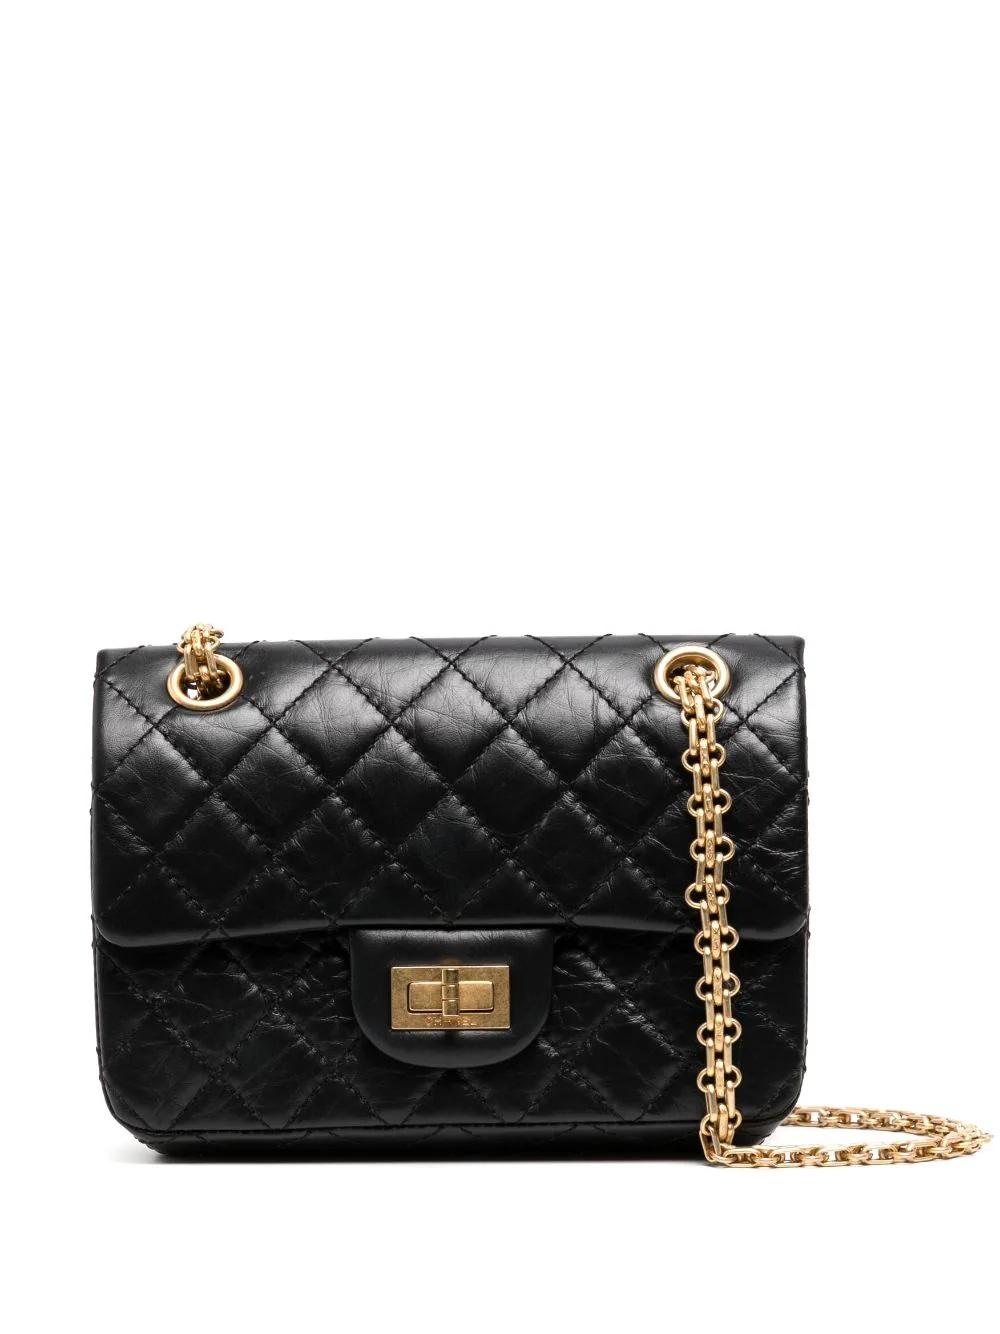 Women's or Men's Chanel Mini 2.55 Reissue Flap Bag